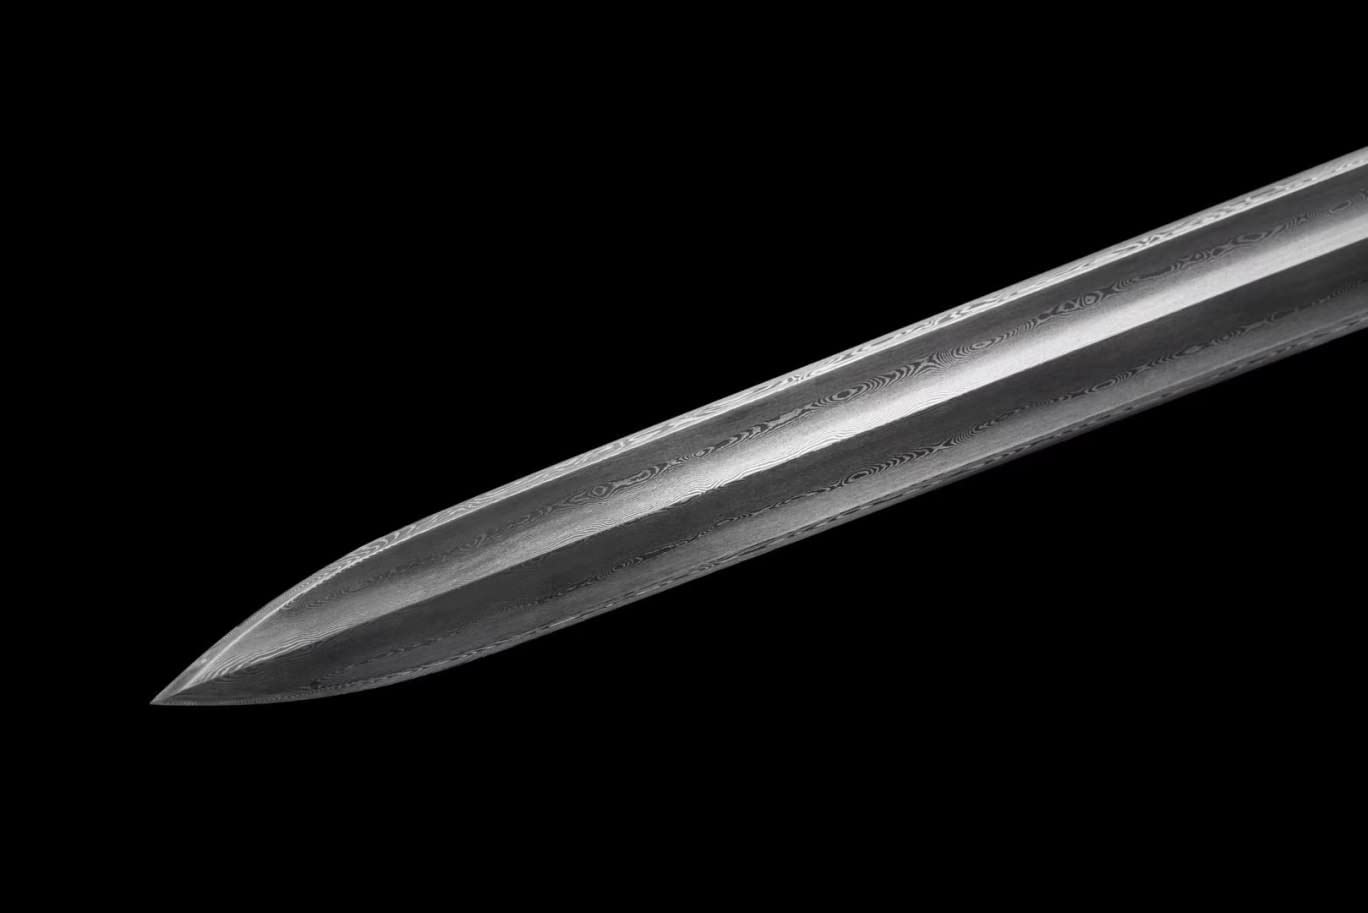 Yuewang Sword,Damascus Steel Blades,Brass Fittings,Redwood Scabbard